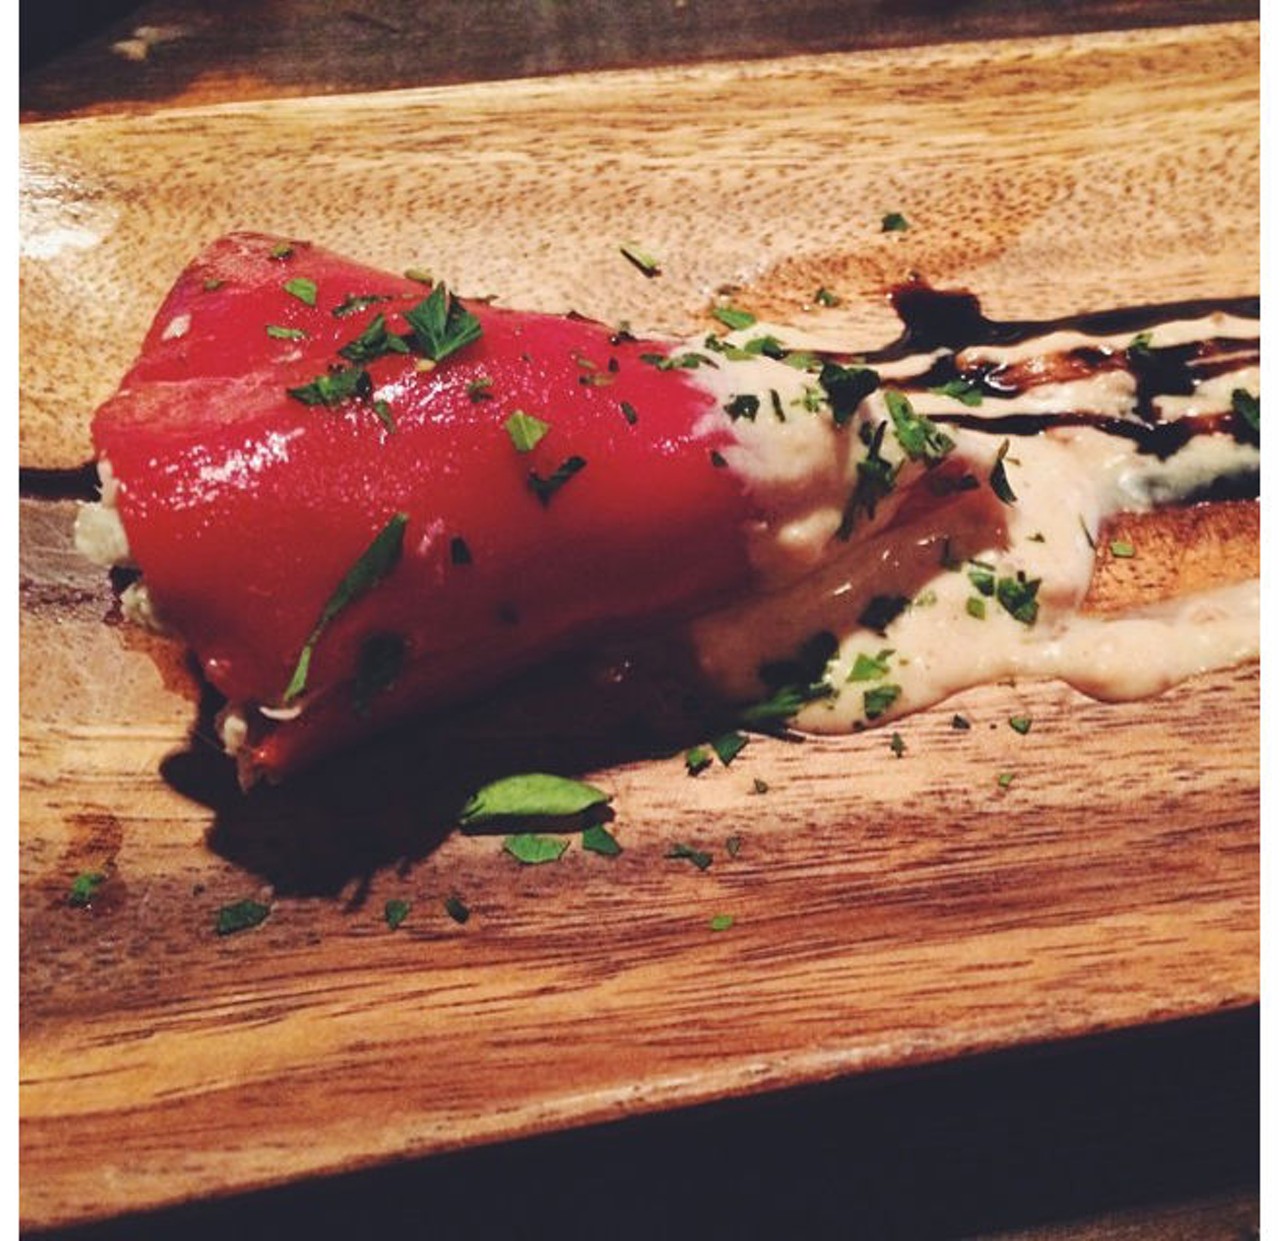 Stuffed piquillo pepper at Txokos Basque Kitchen (via Instagram user @desultoryme)